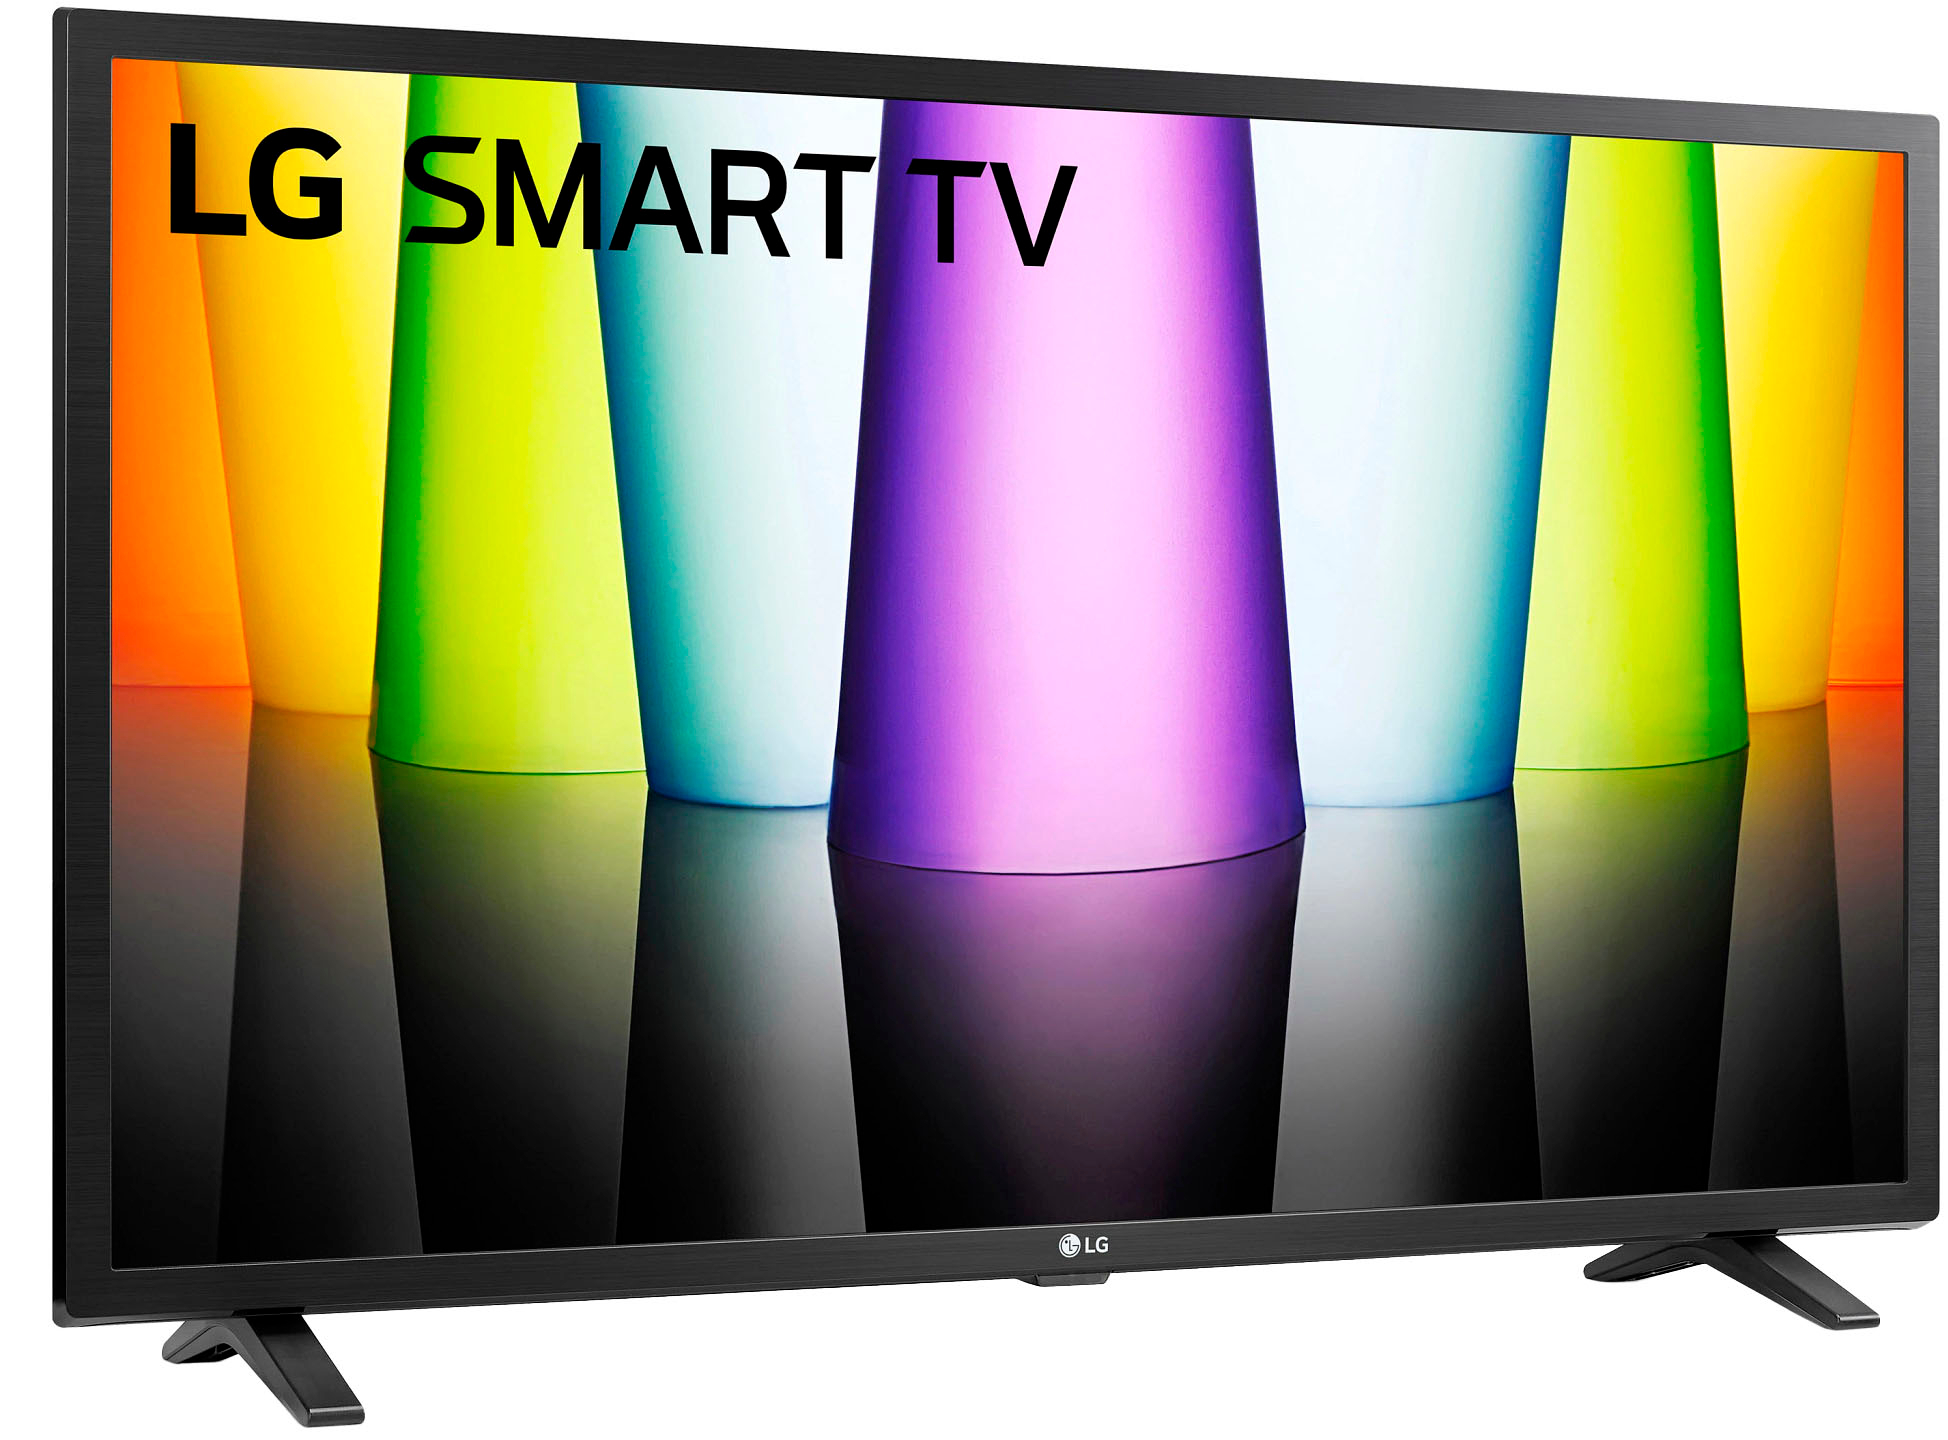 Televisor LG 32 Pulgadas LED HD Smart Tv Negro 32LQ630BPSAAWC